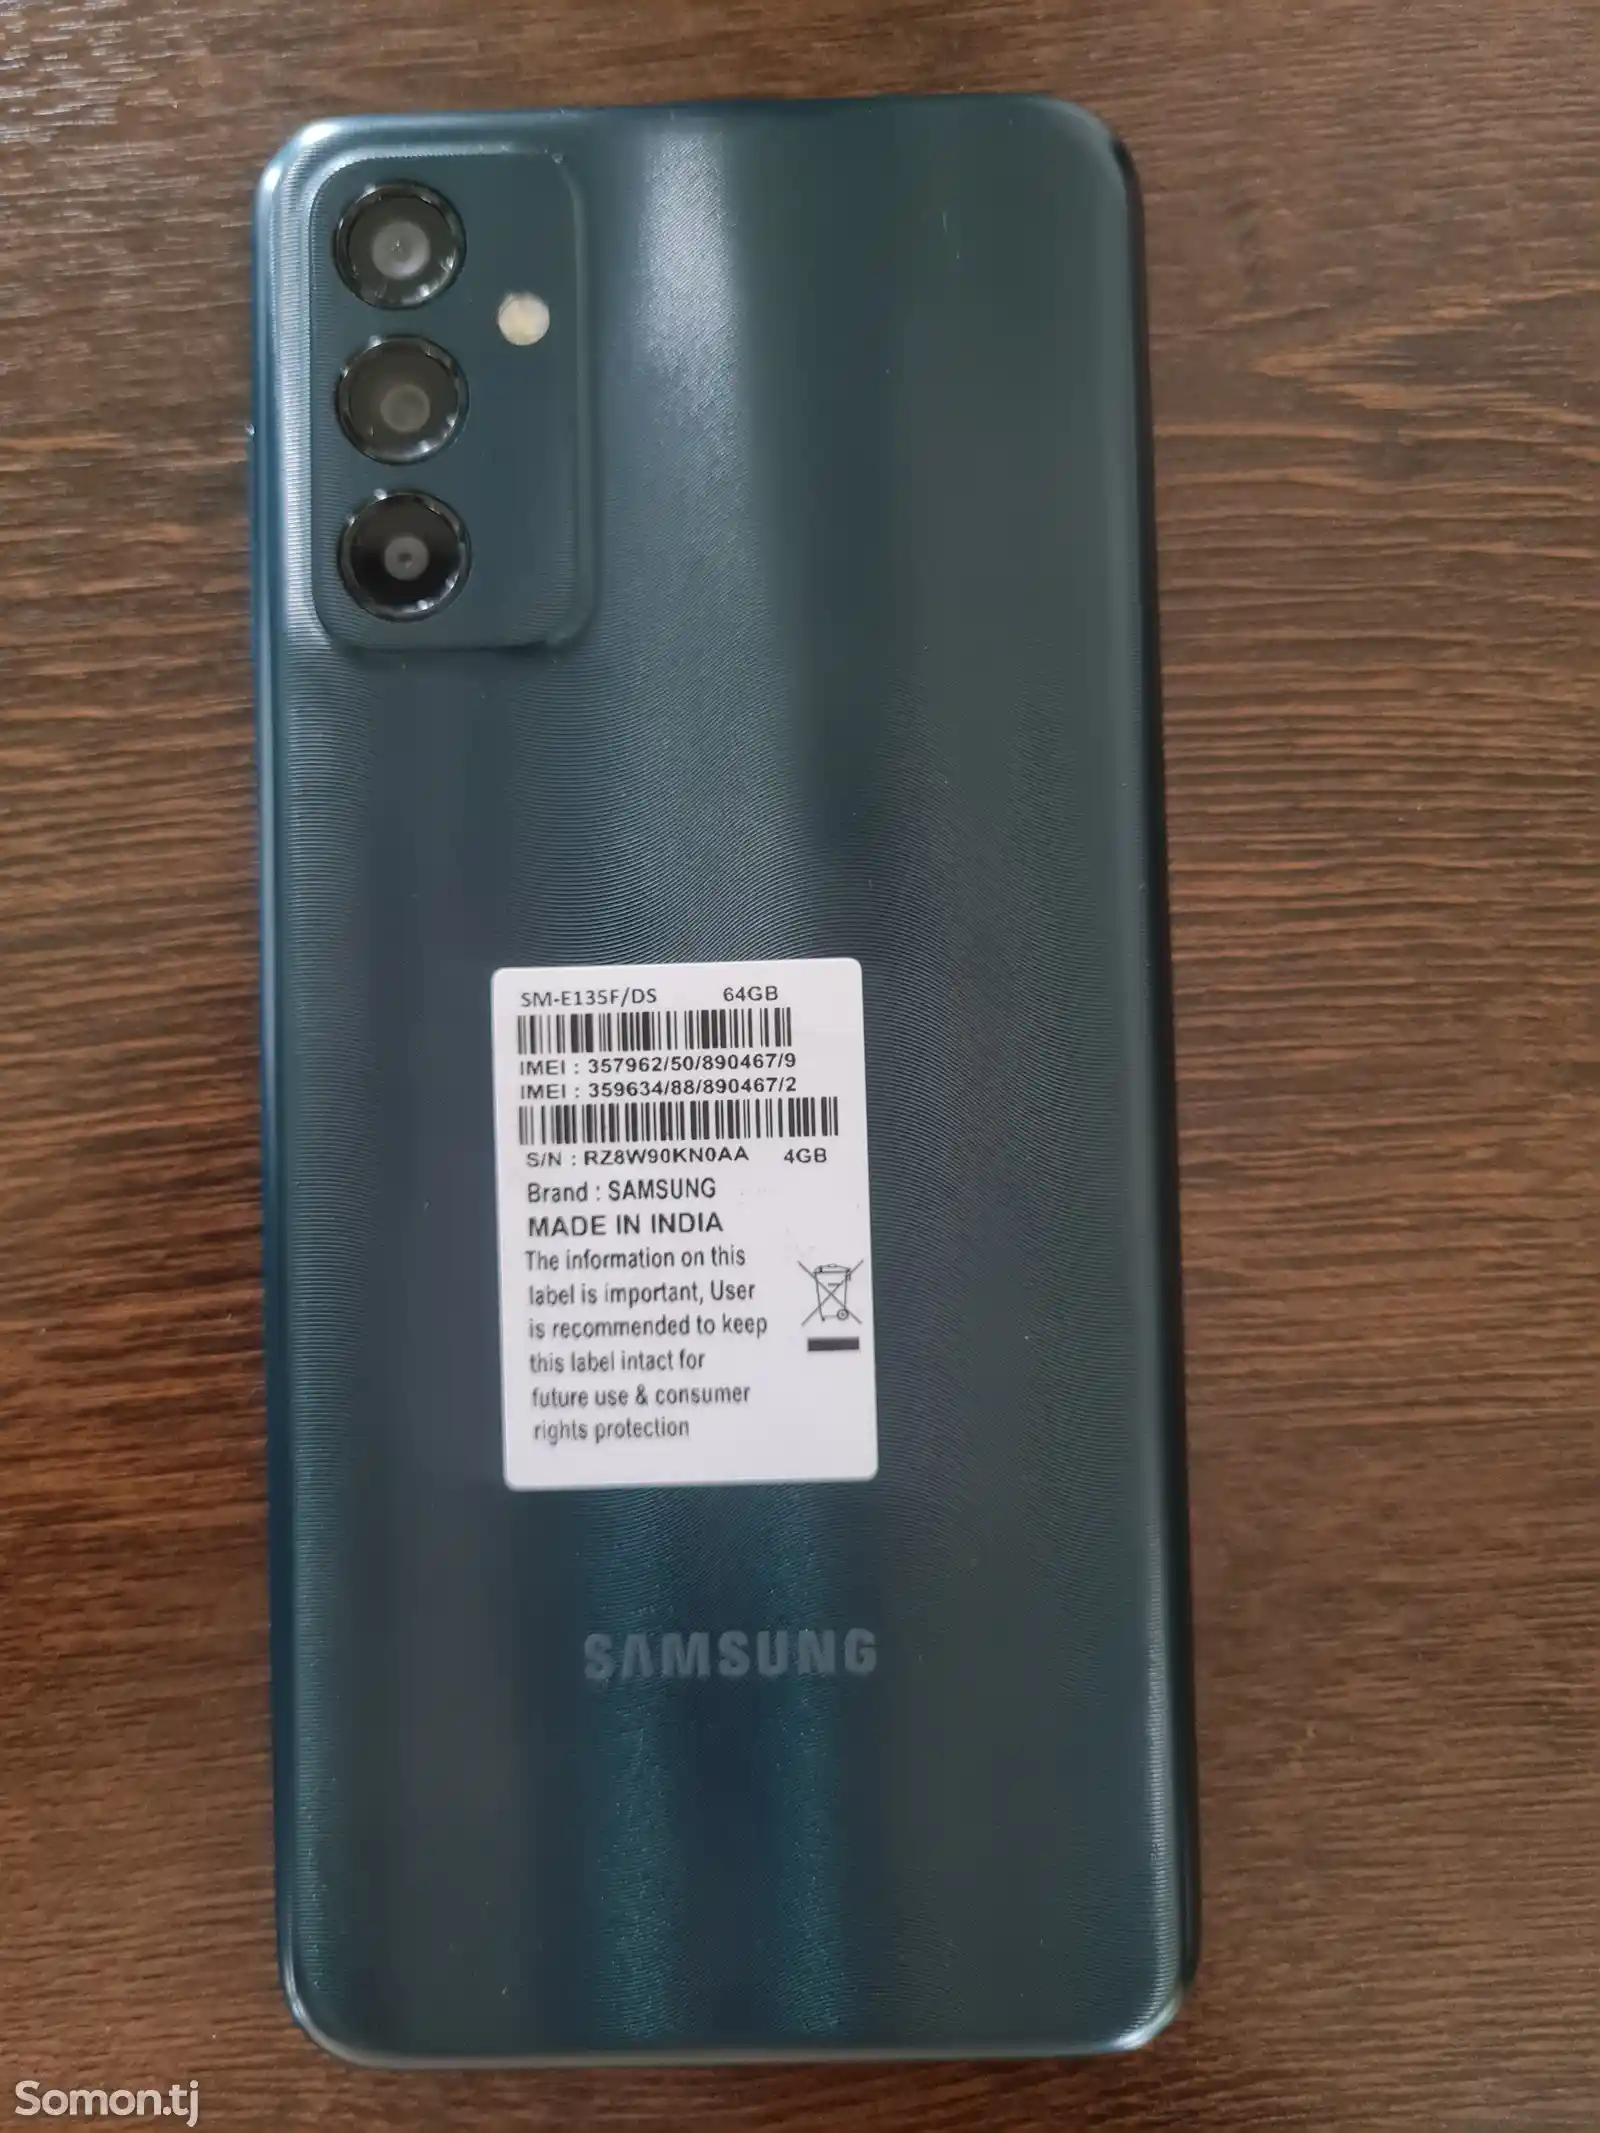 Samsung Galaxy F13-3